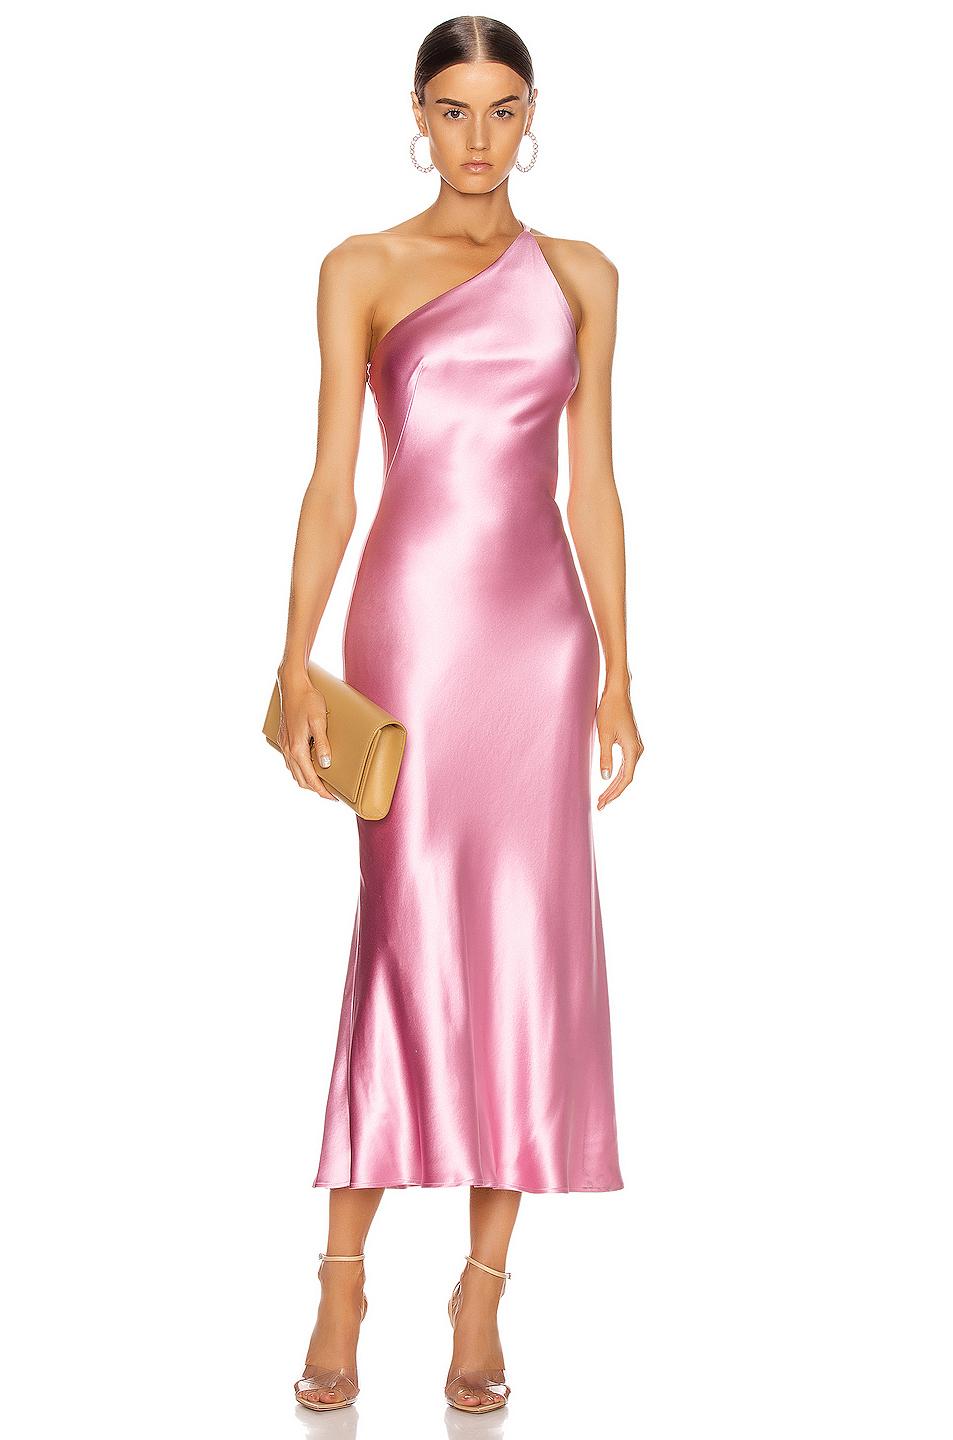 Galvan London Cropped Roxy Dress in Rose (Pink) - Lyst